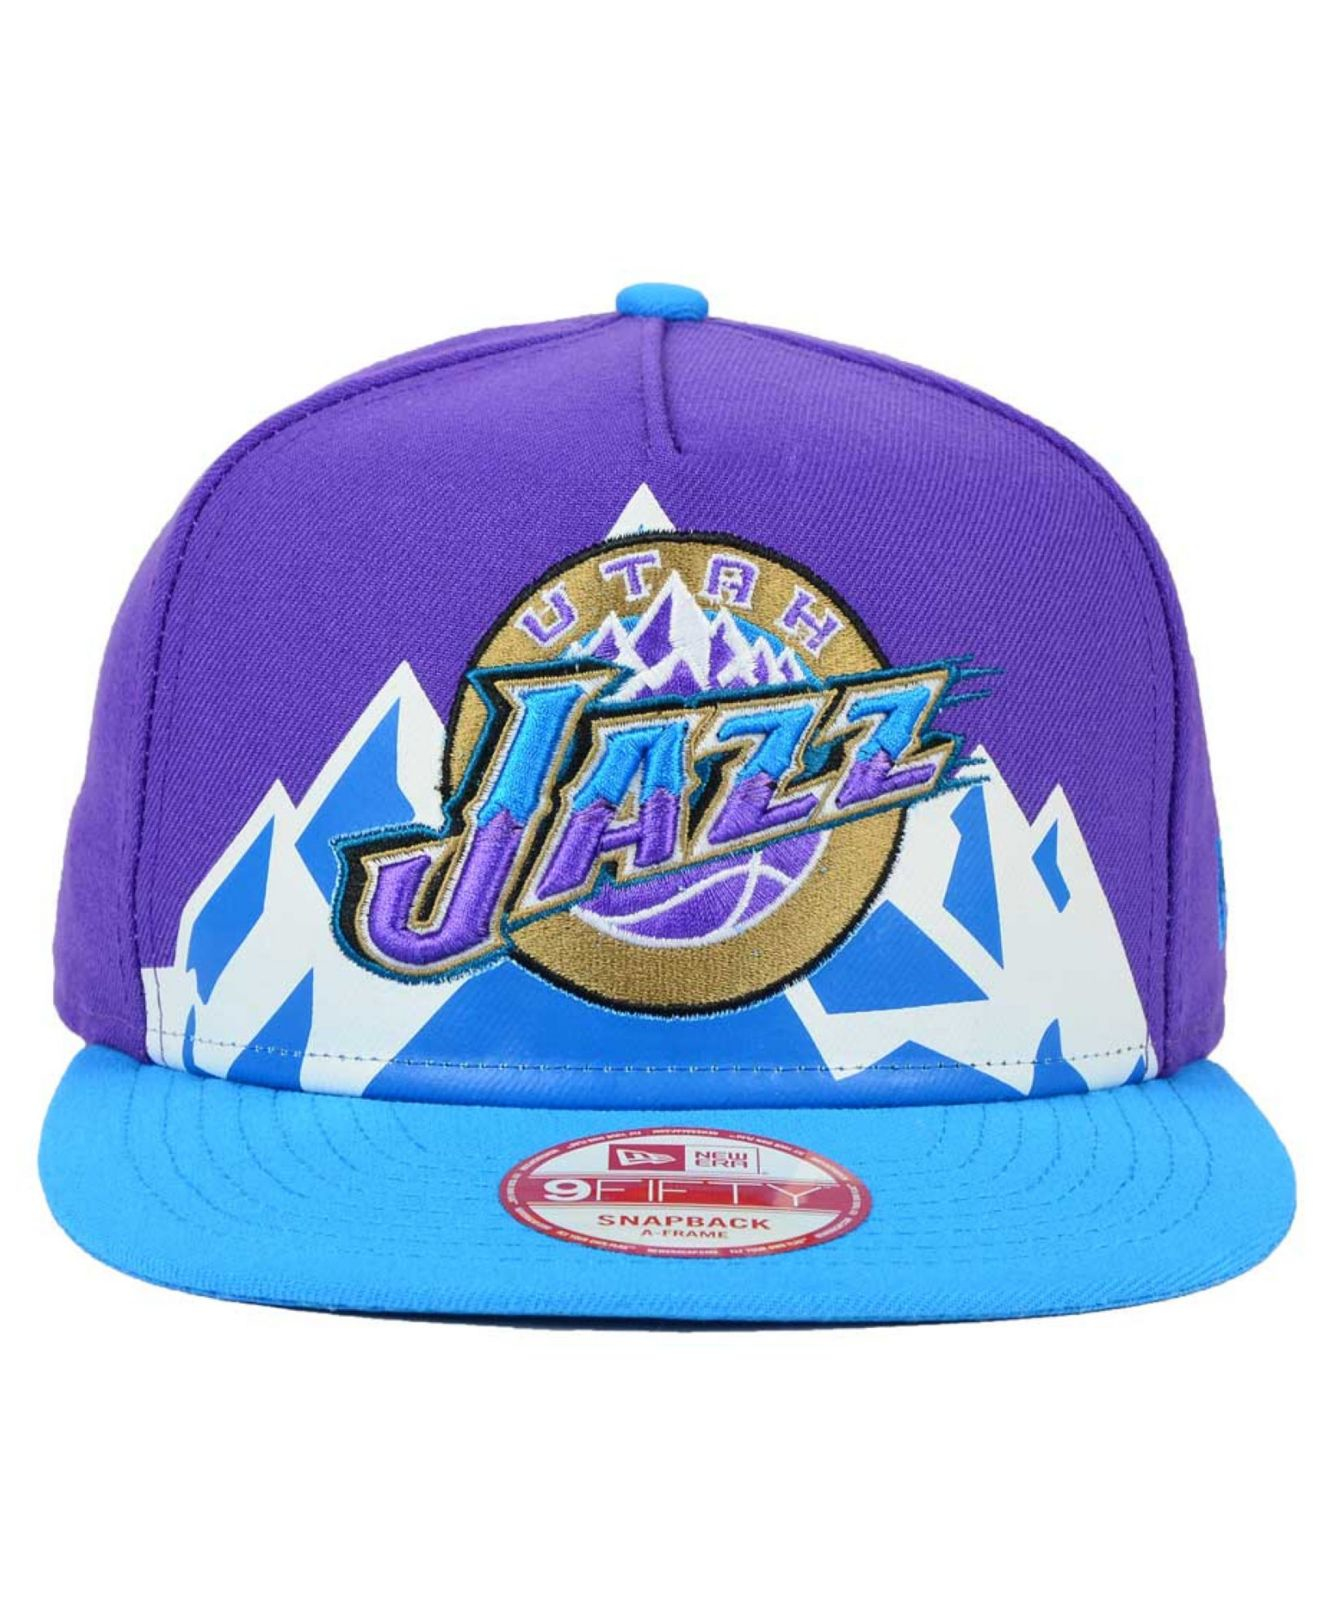 utah jazz snapback hat